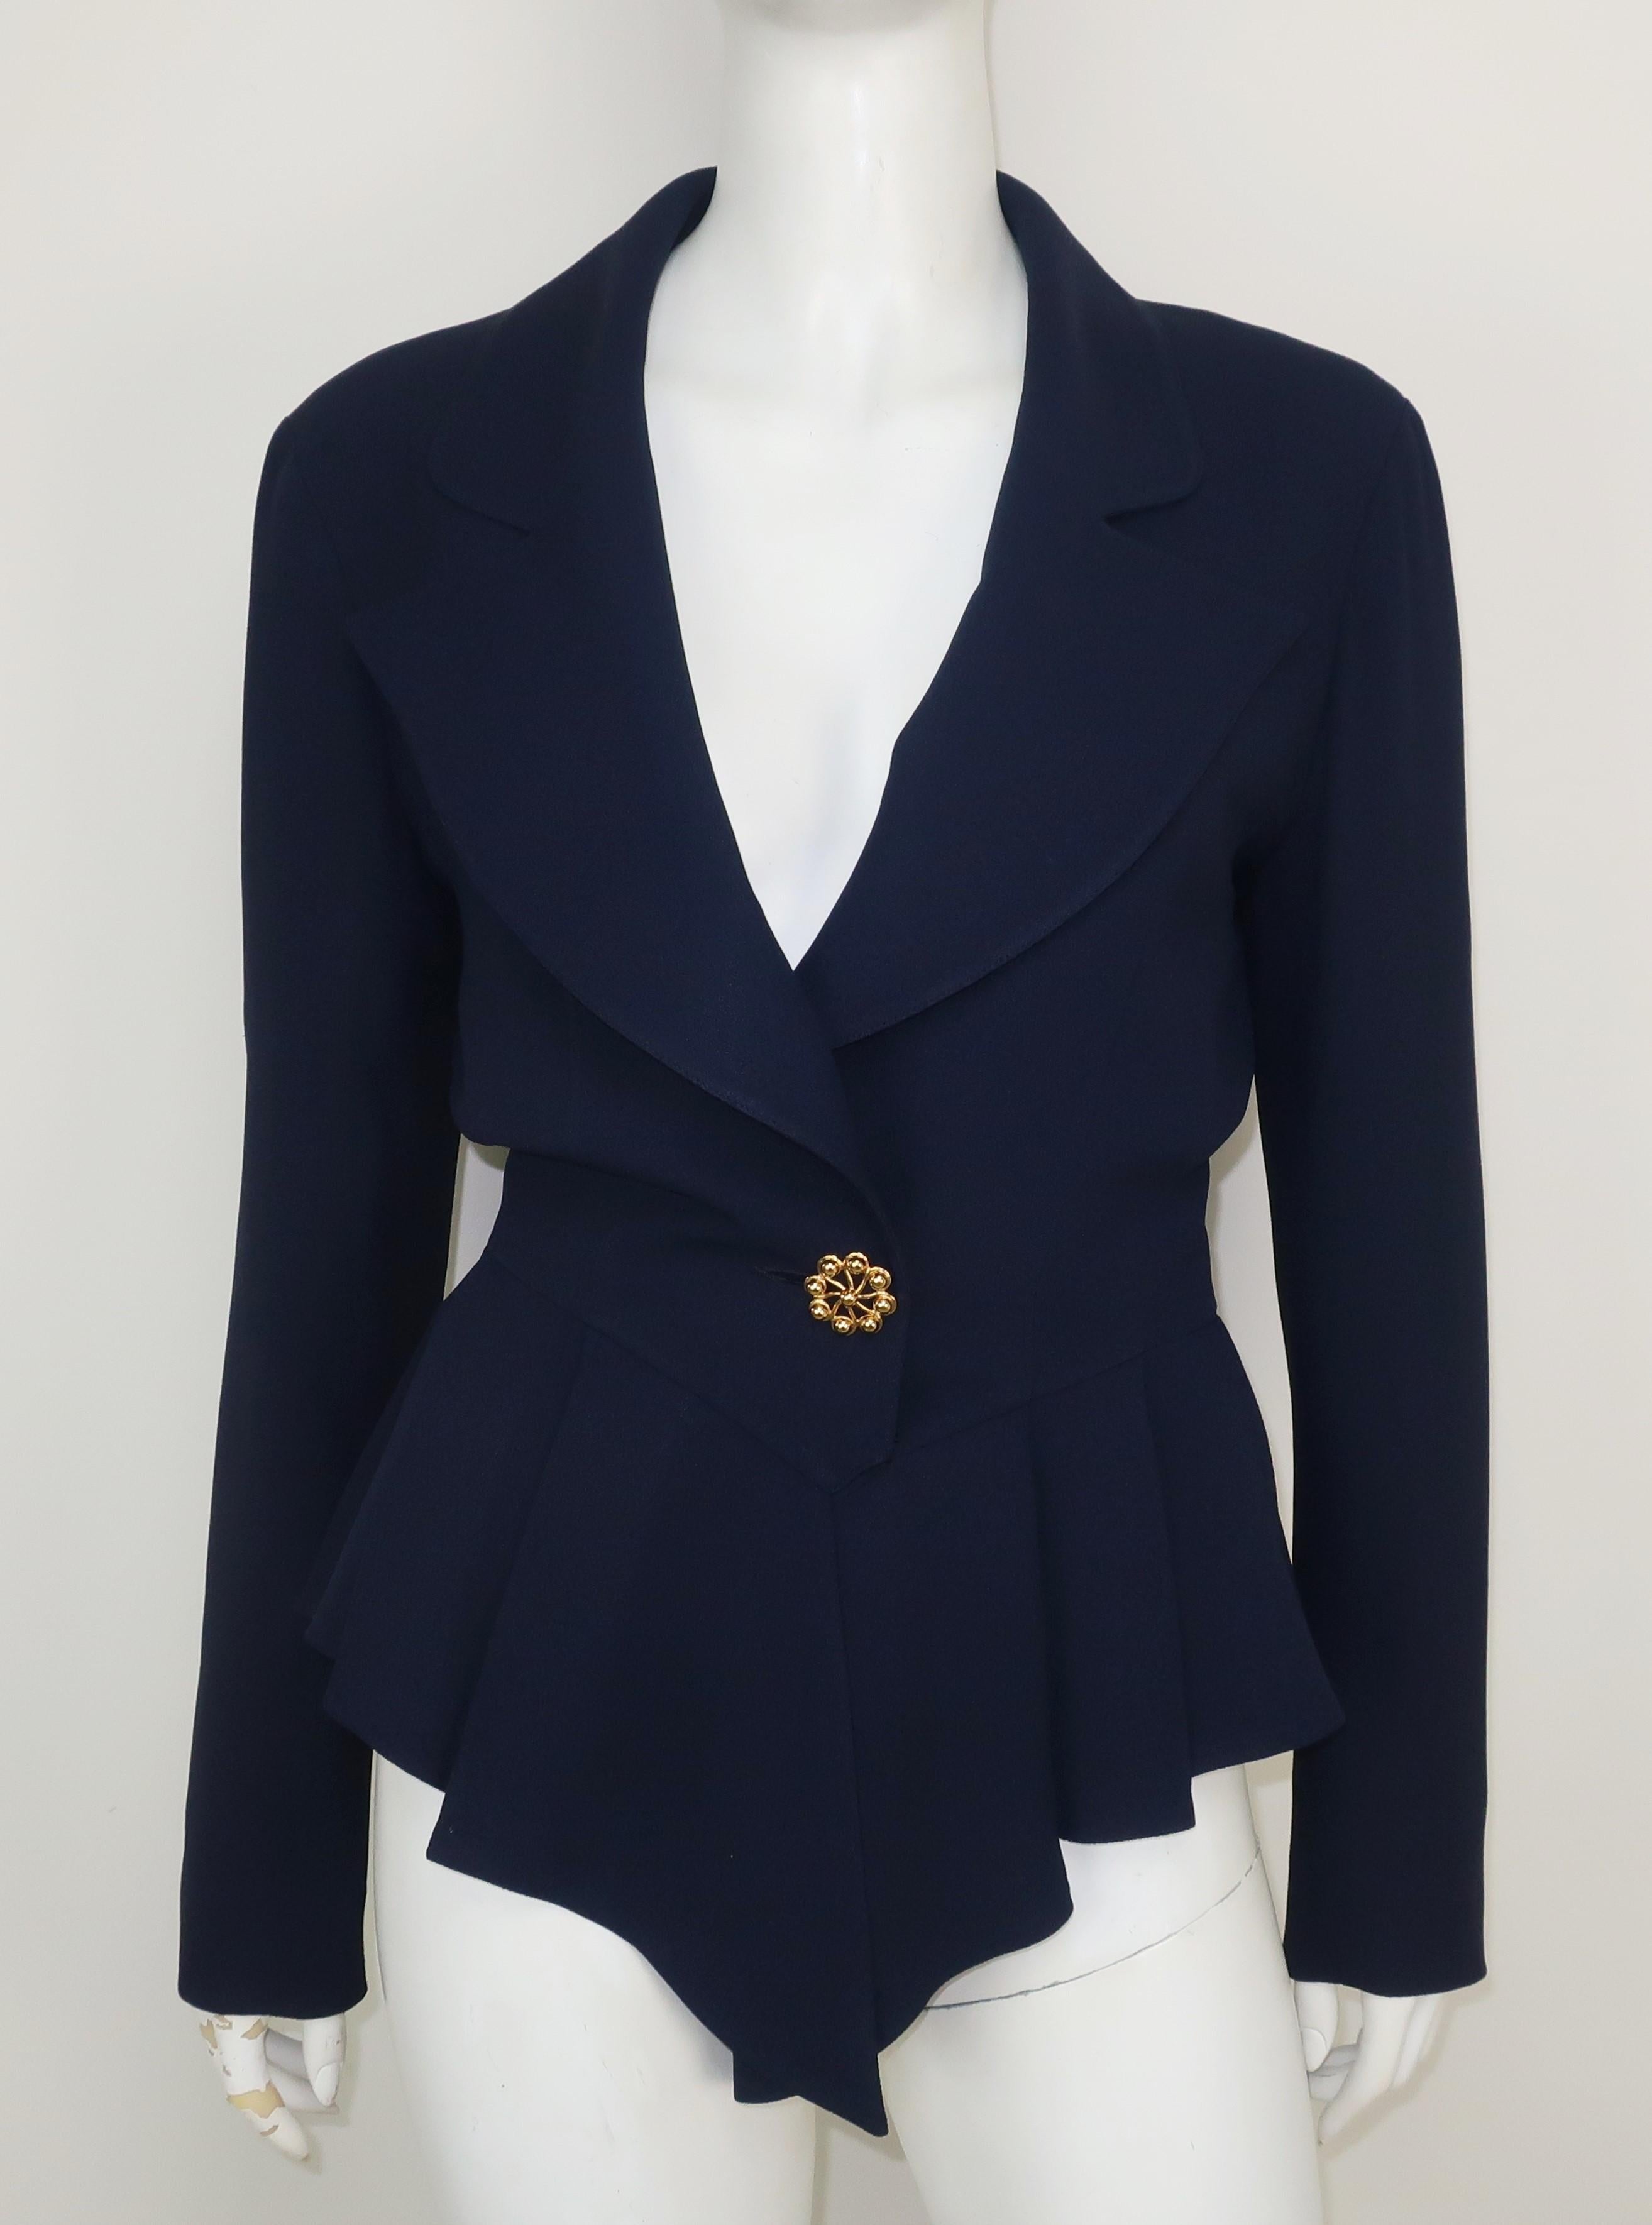 Karl Lagerfeld Navy Blue Peplum Skirt Suit C.1990 4